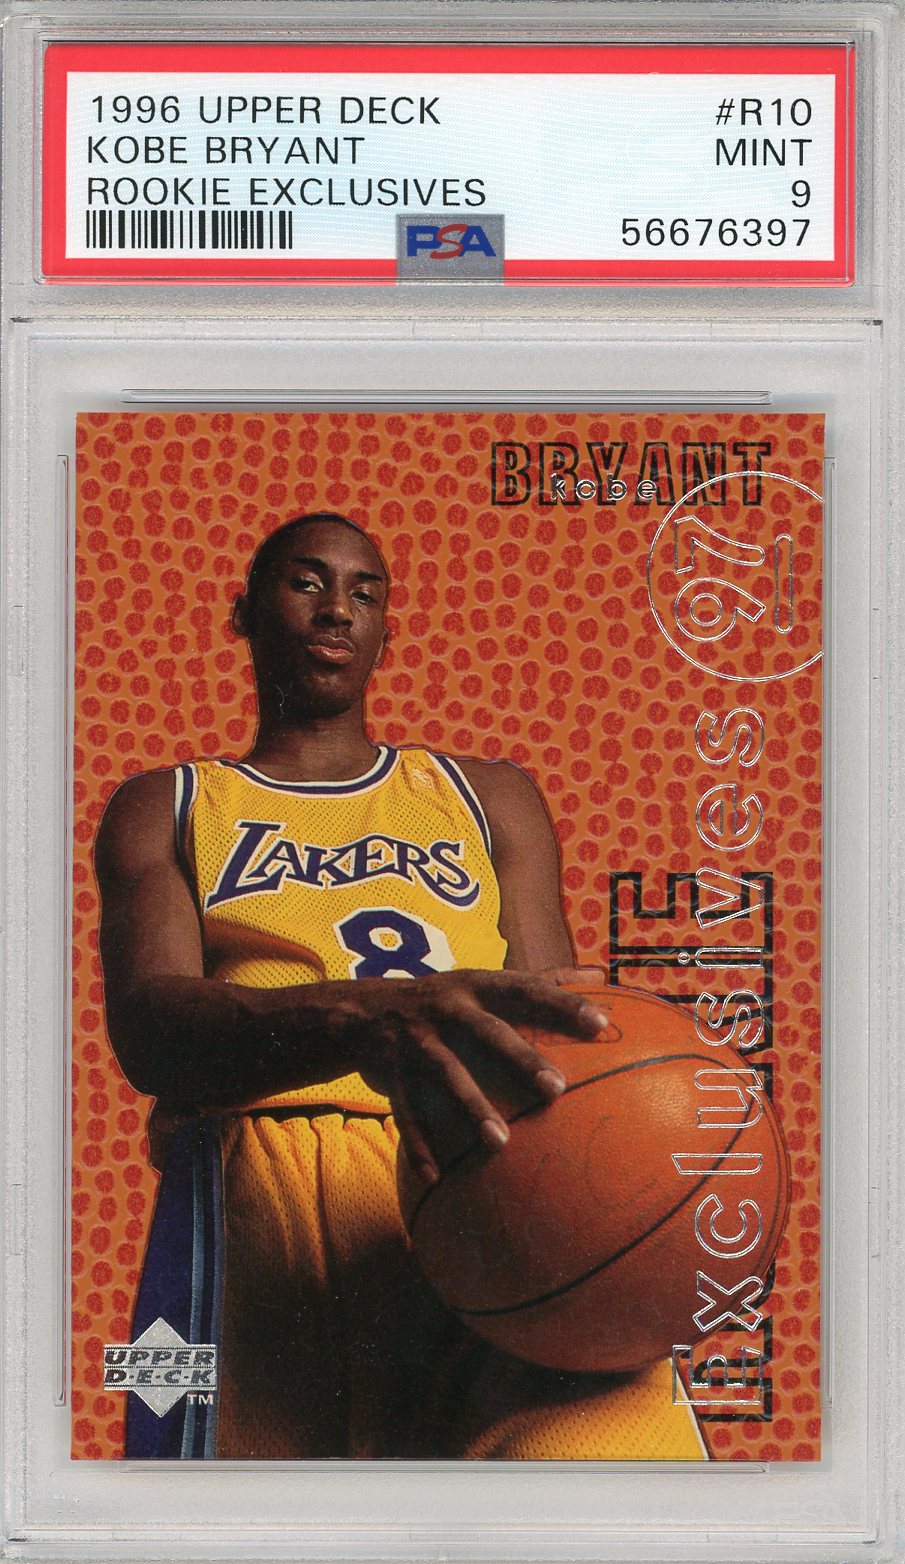 Kobe Bryant 1996 Upper Deck Rookie Exclusives Card #R10 (PSA Mint